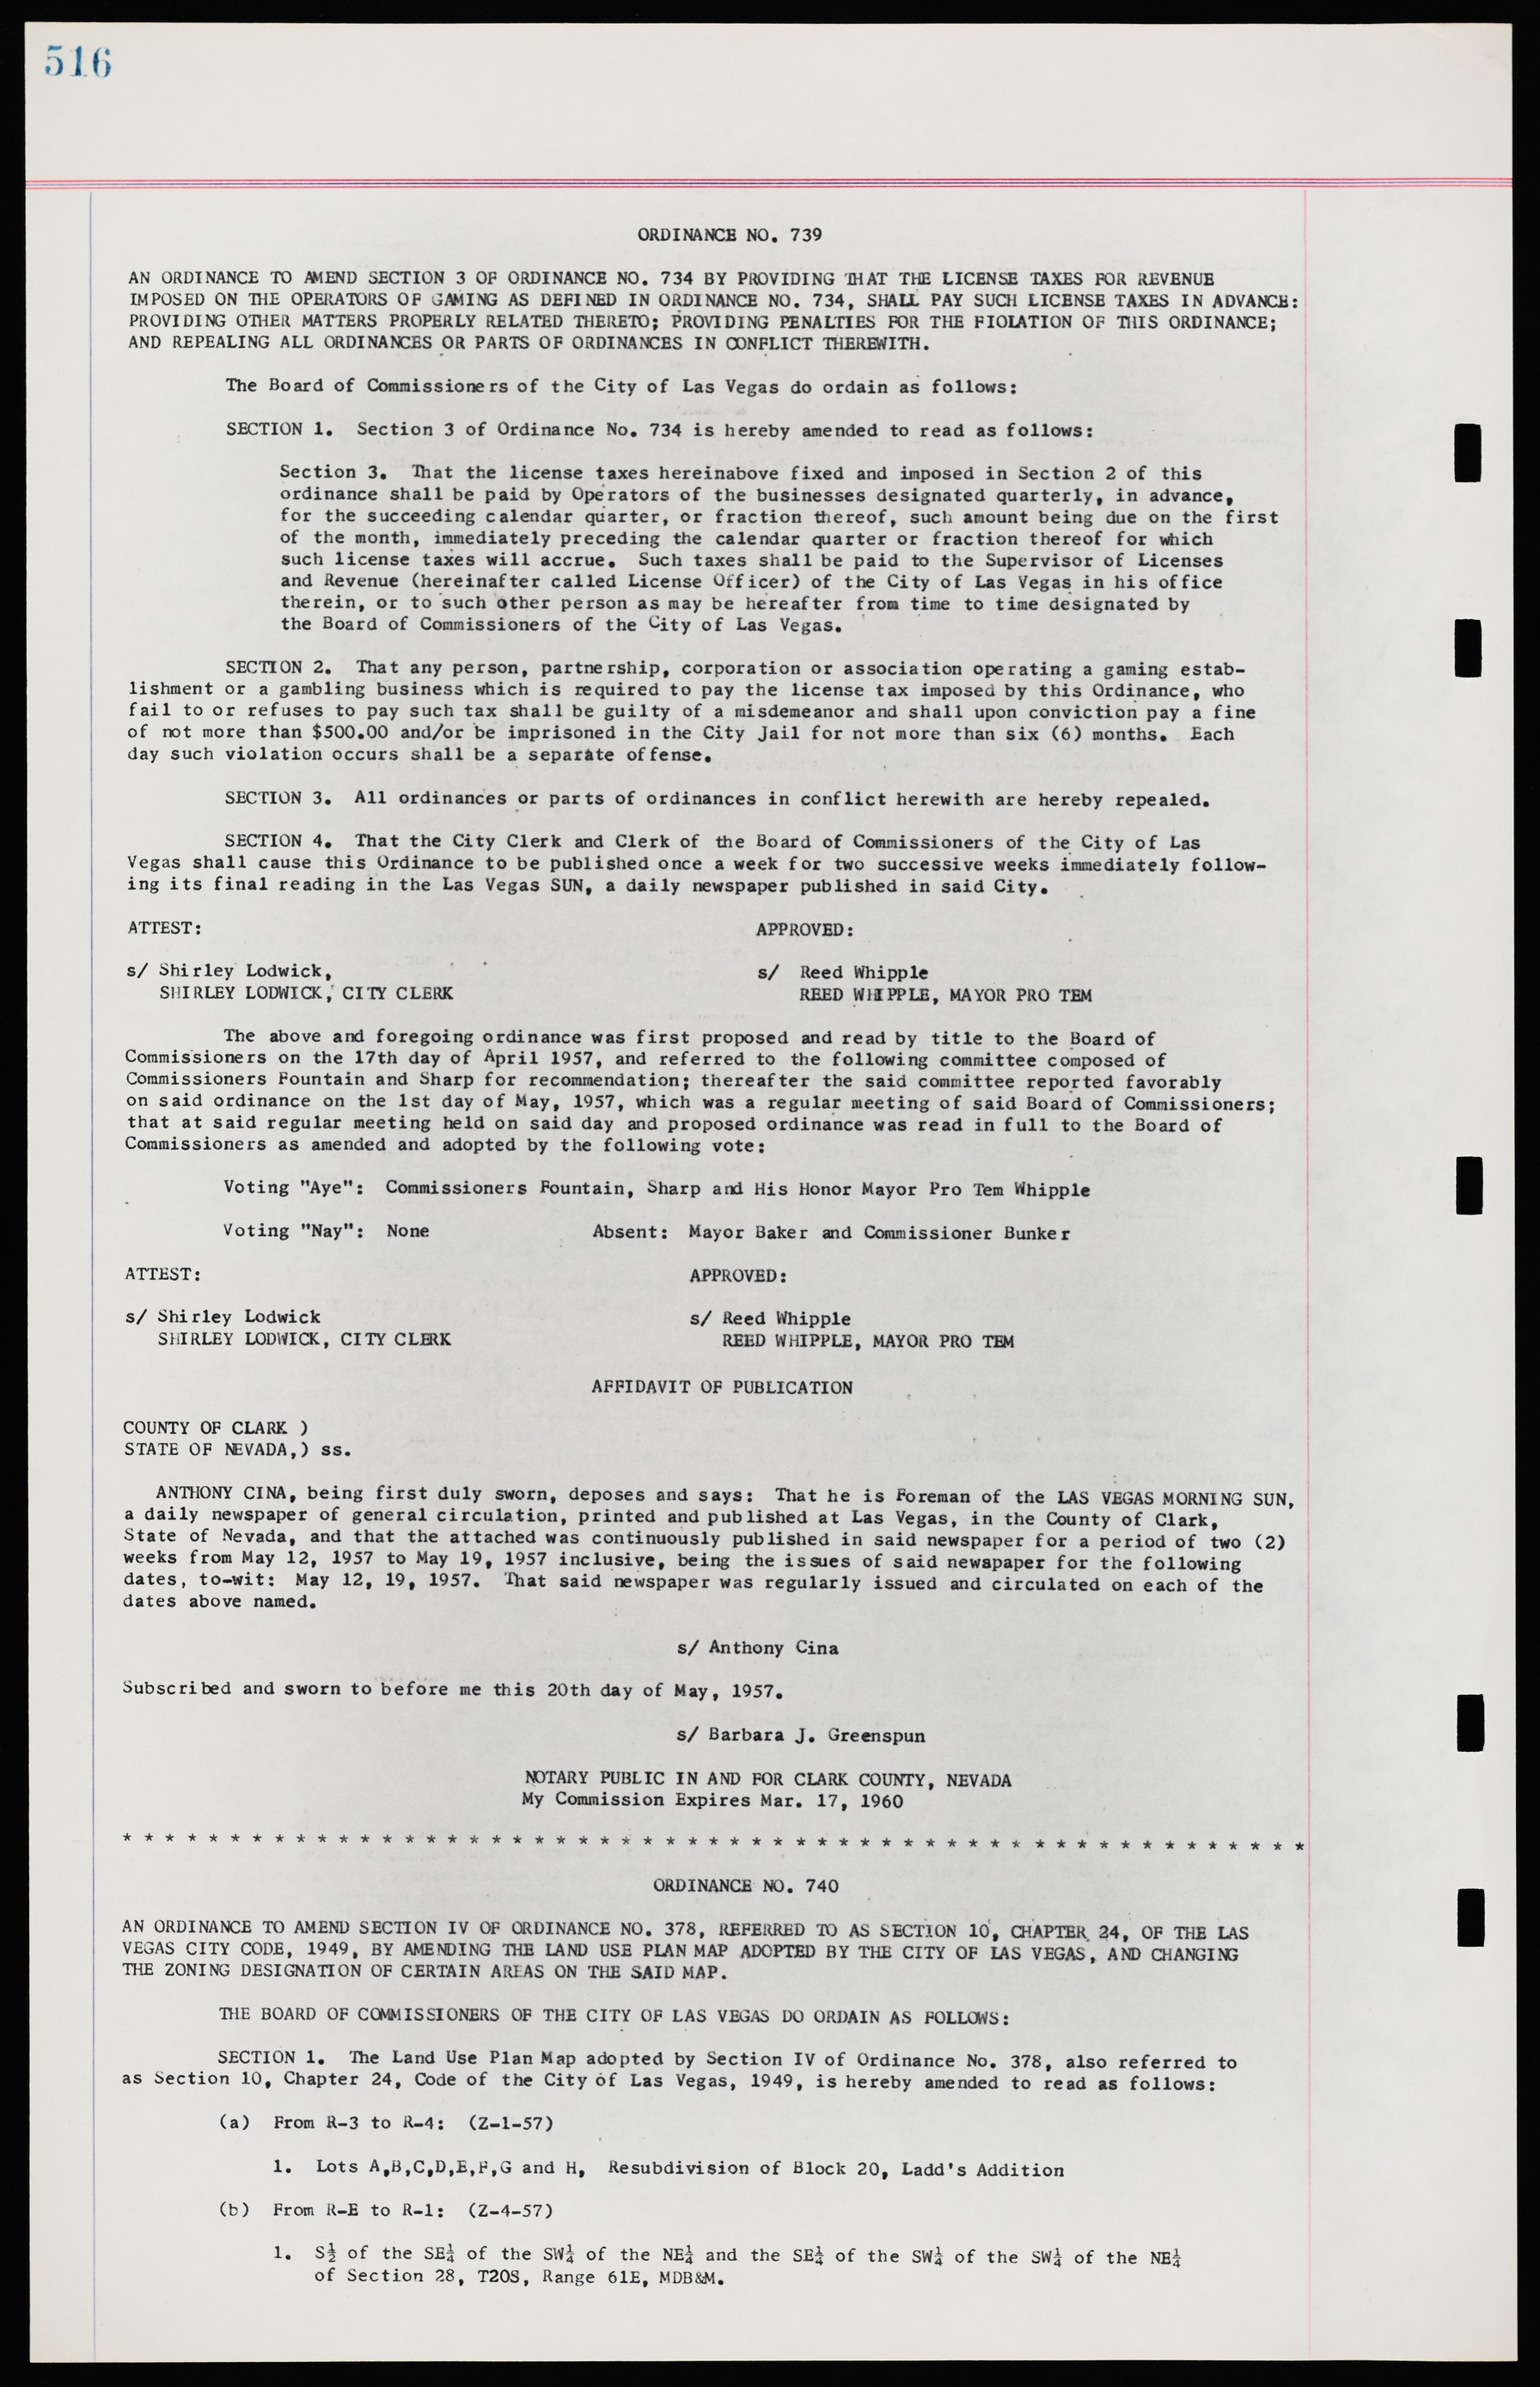 Las Vegas City Ordinances, November 13, 1950 to August 6, 1958, lvc000015-524